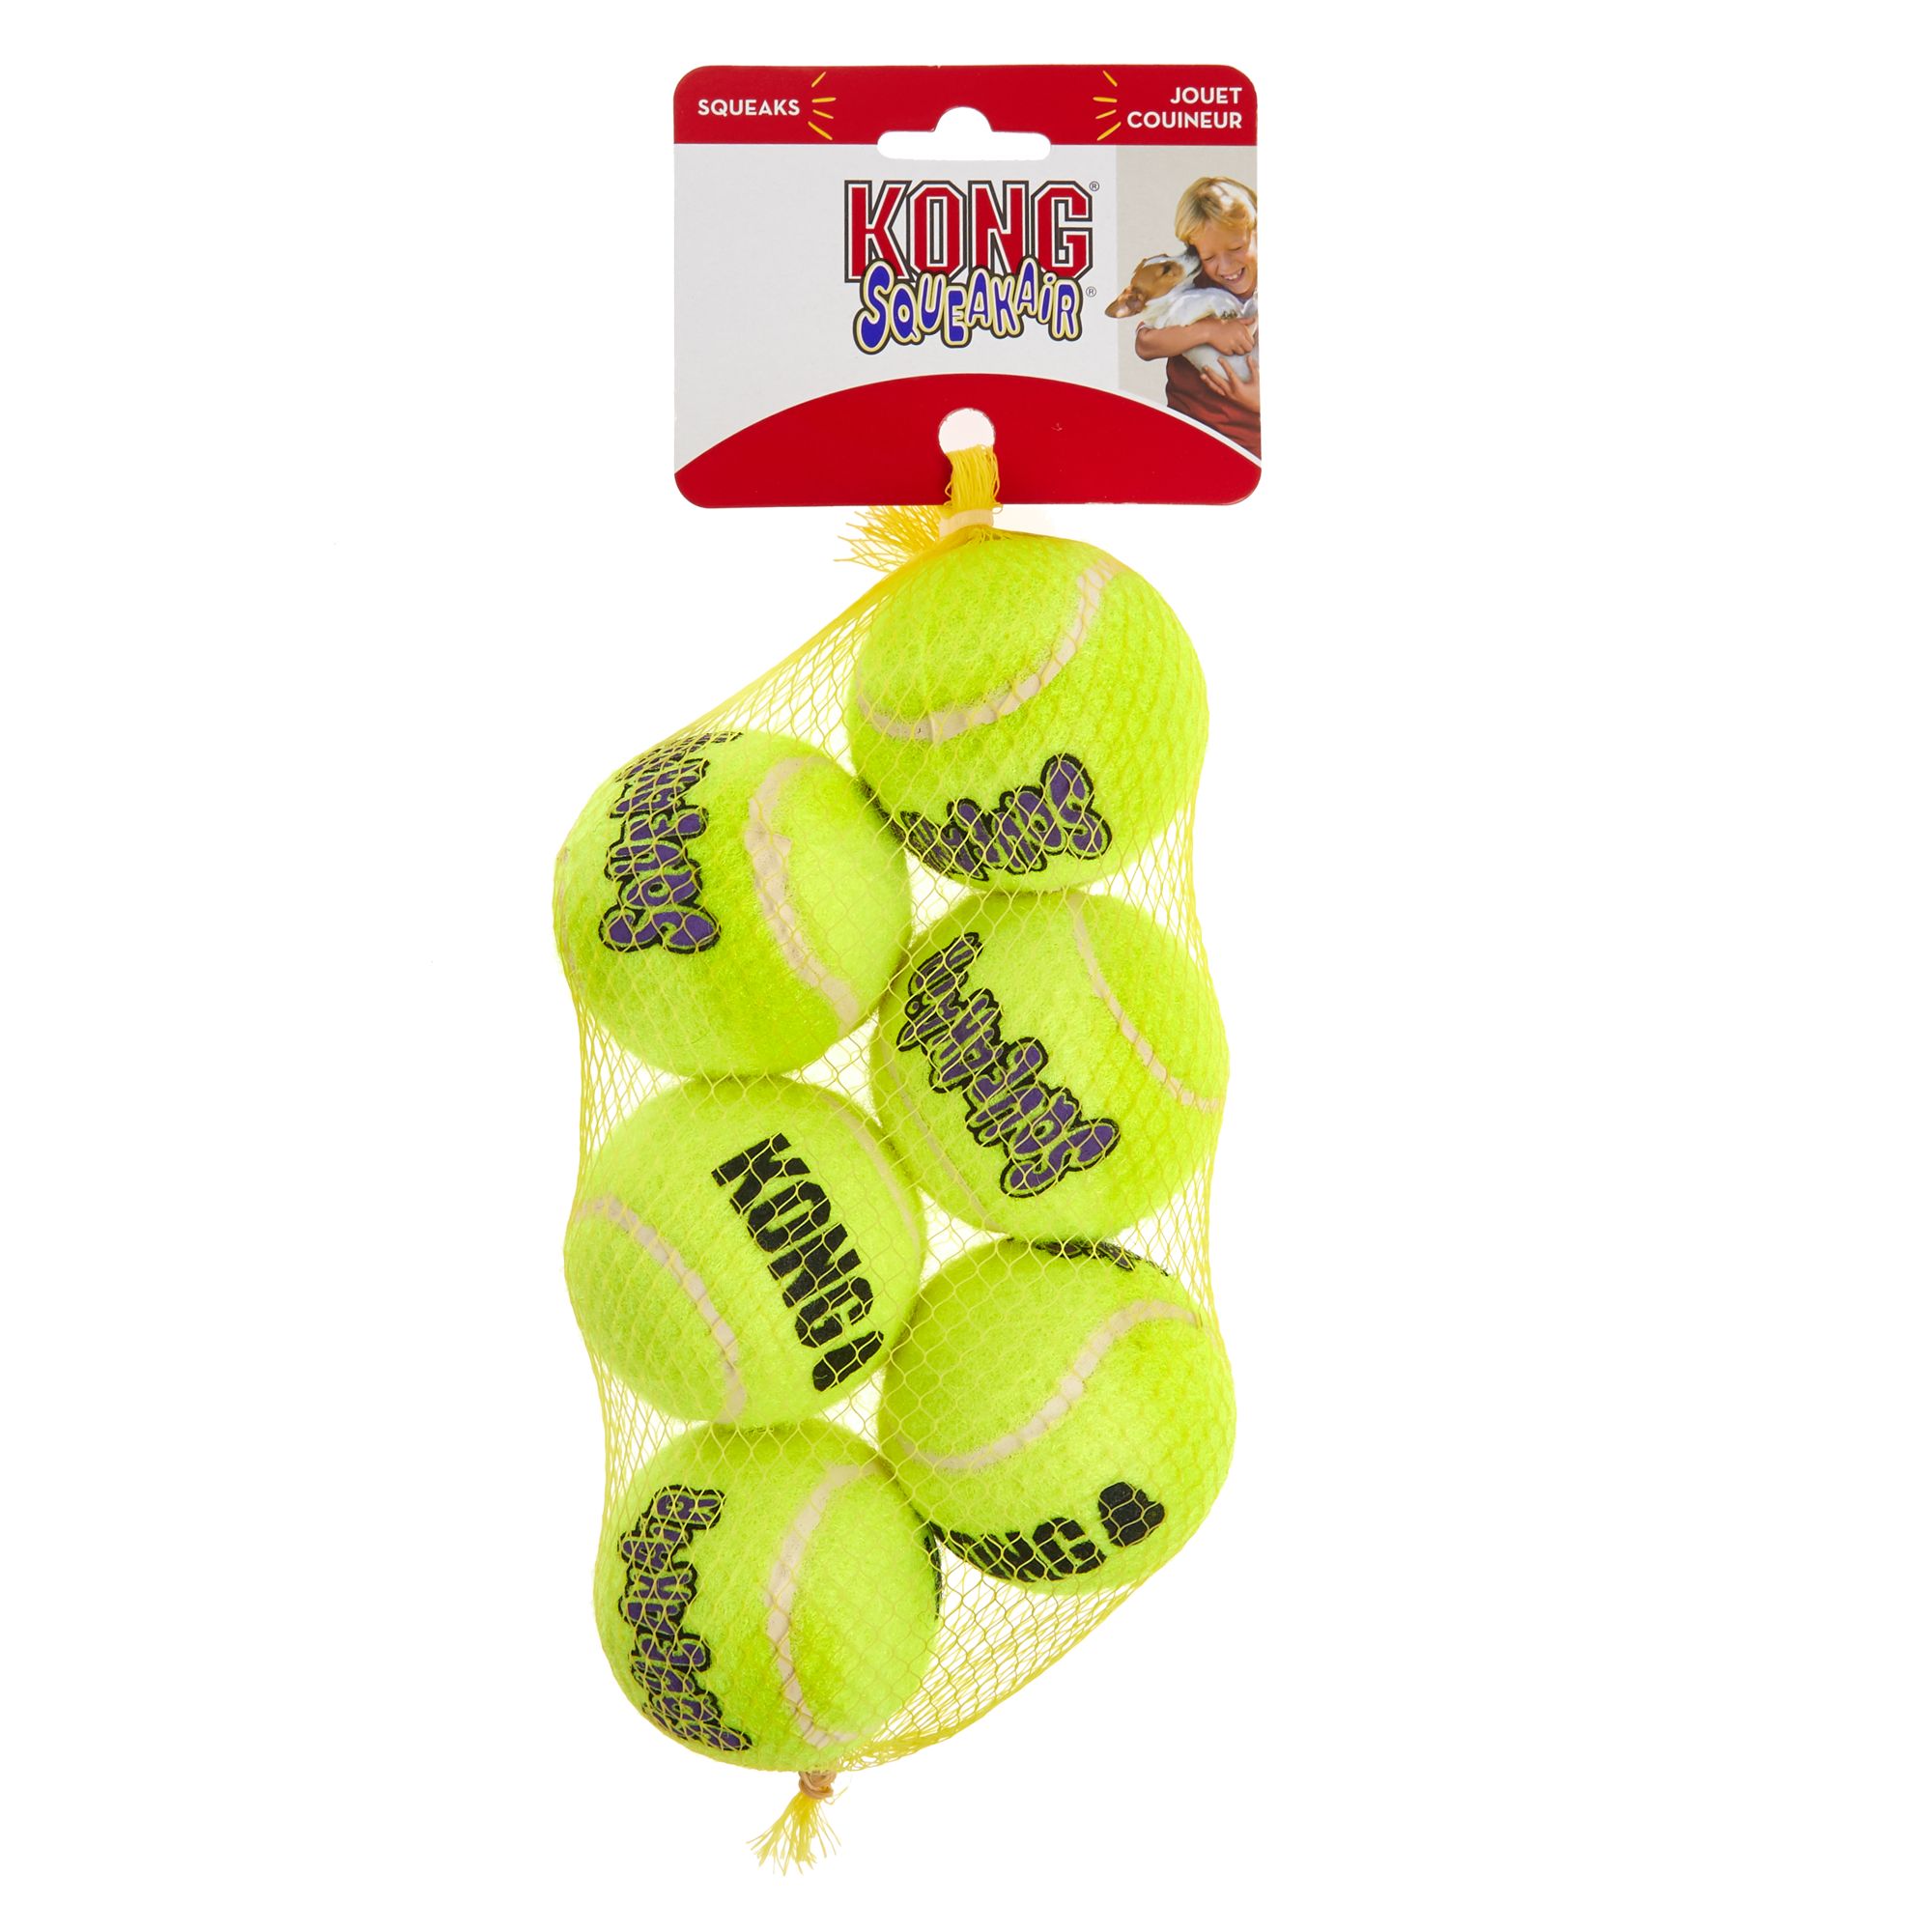 toy tennis set